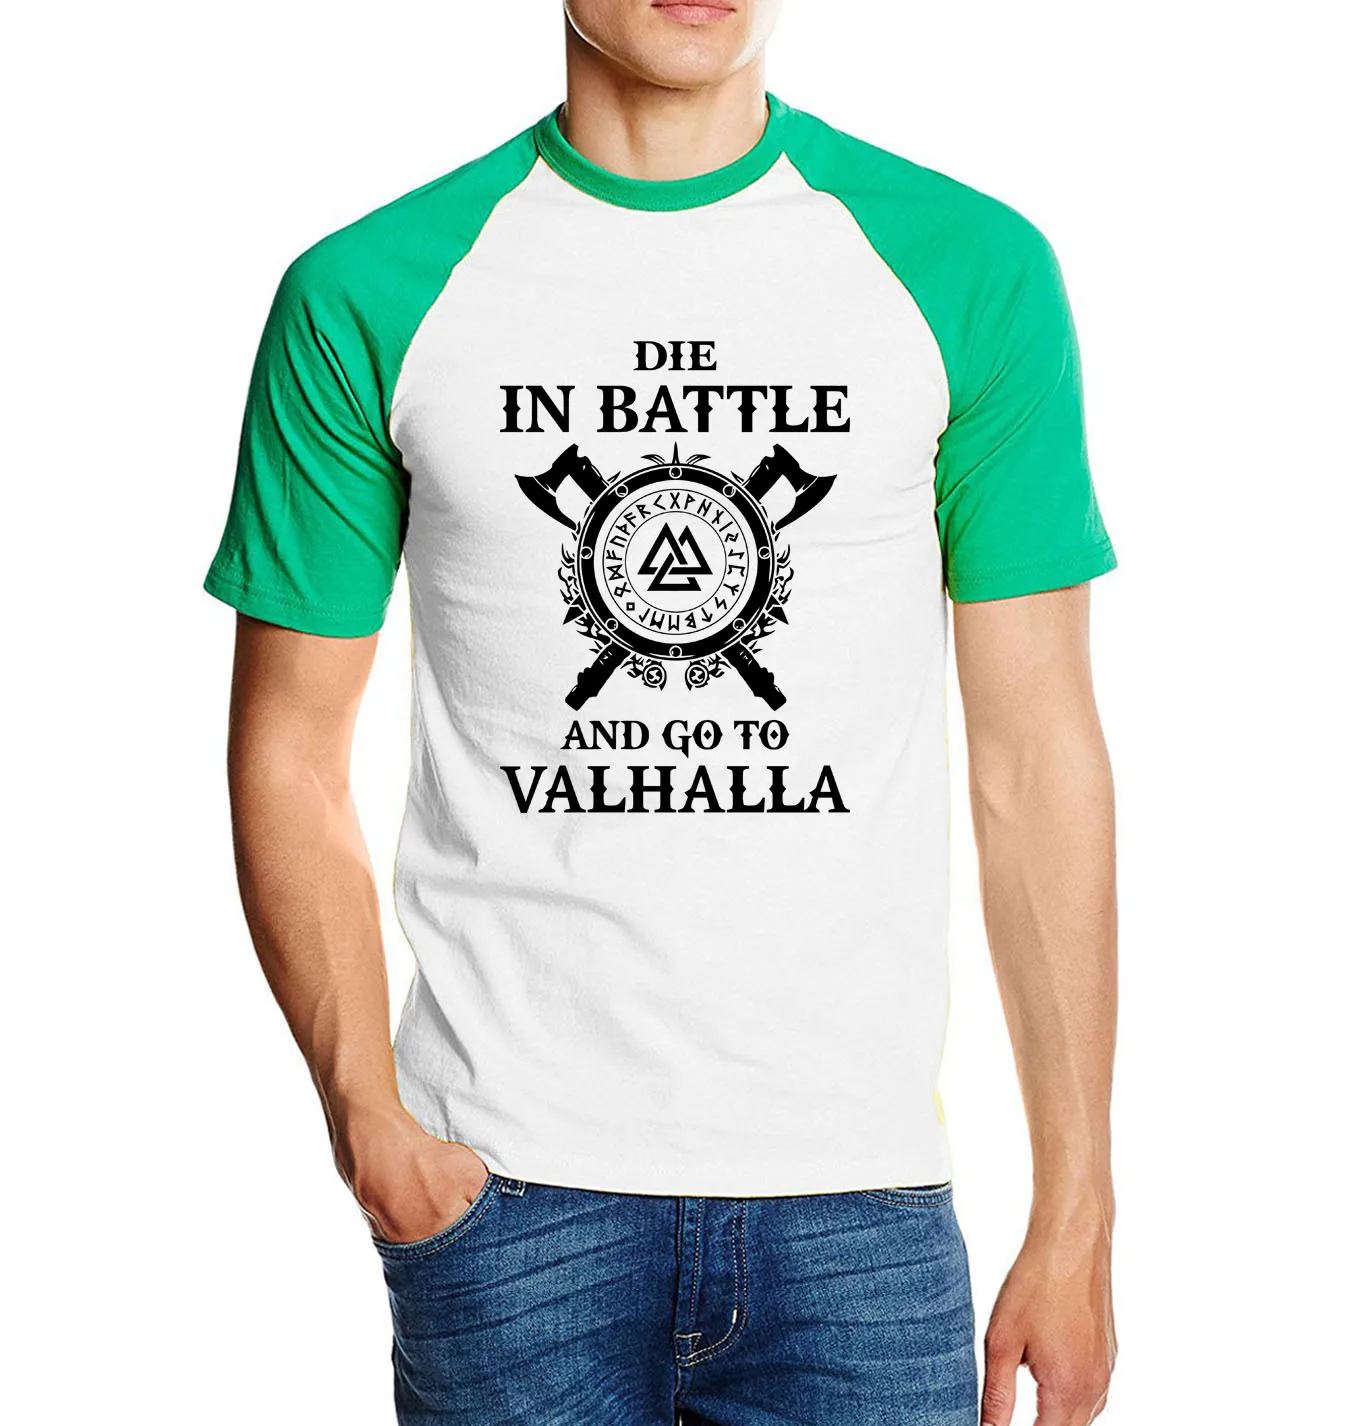 Die In Battle And Go To Valhalla tv Show Viking, мужские футболки, хит лета, реглан викингов, футболка, хлопок, Camisetas Hombre - Цвет: green white1